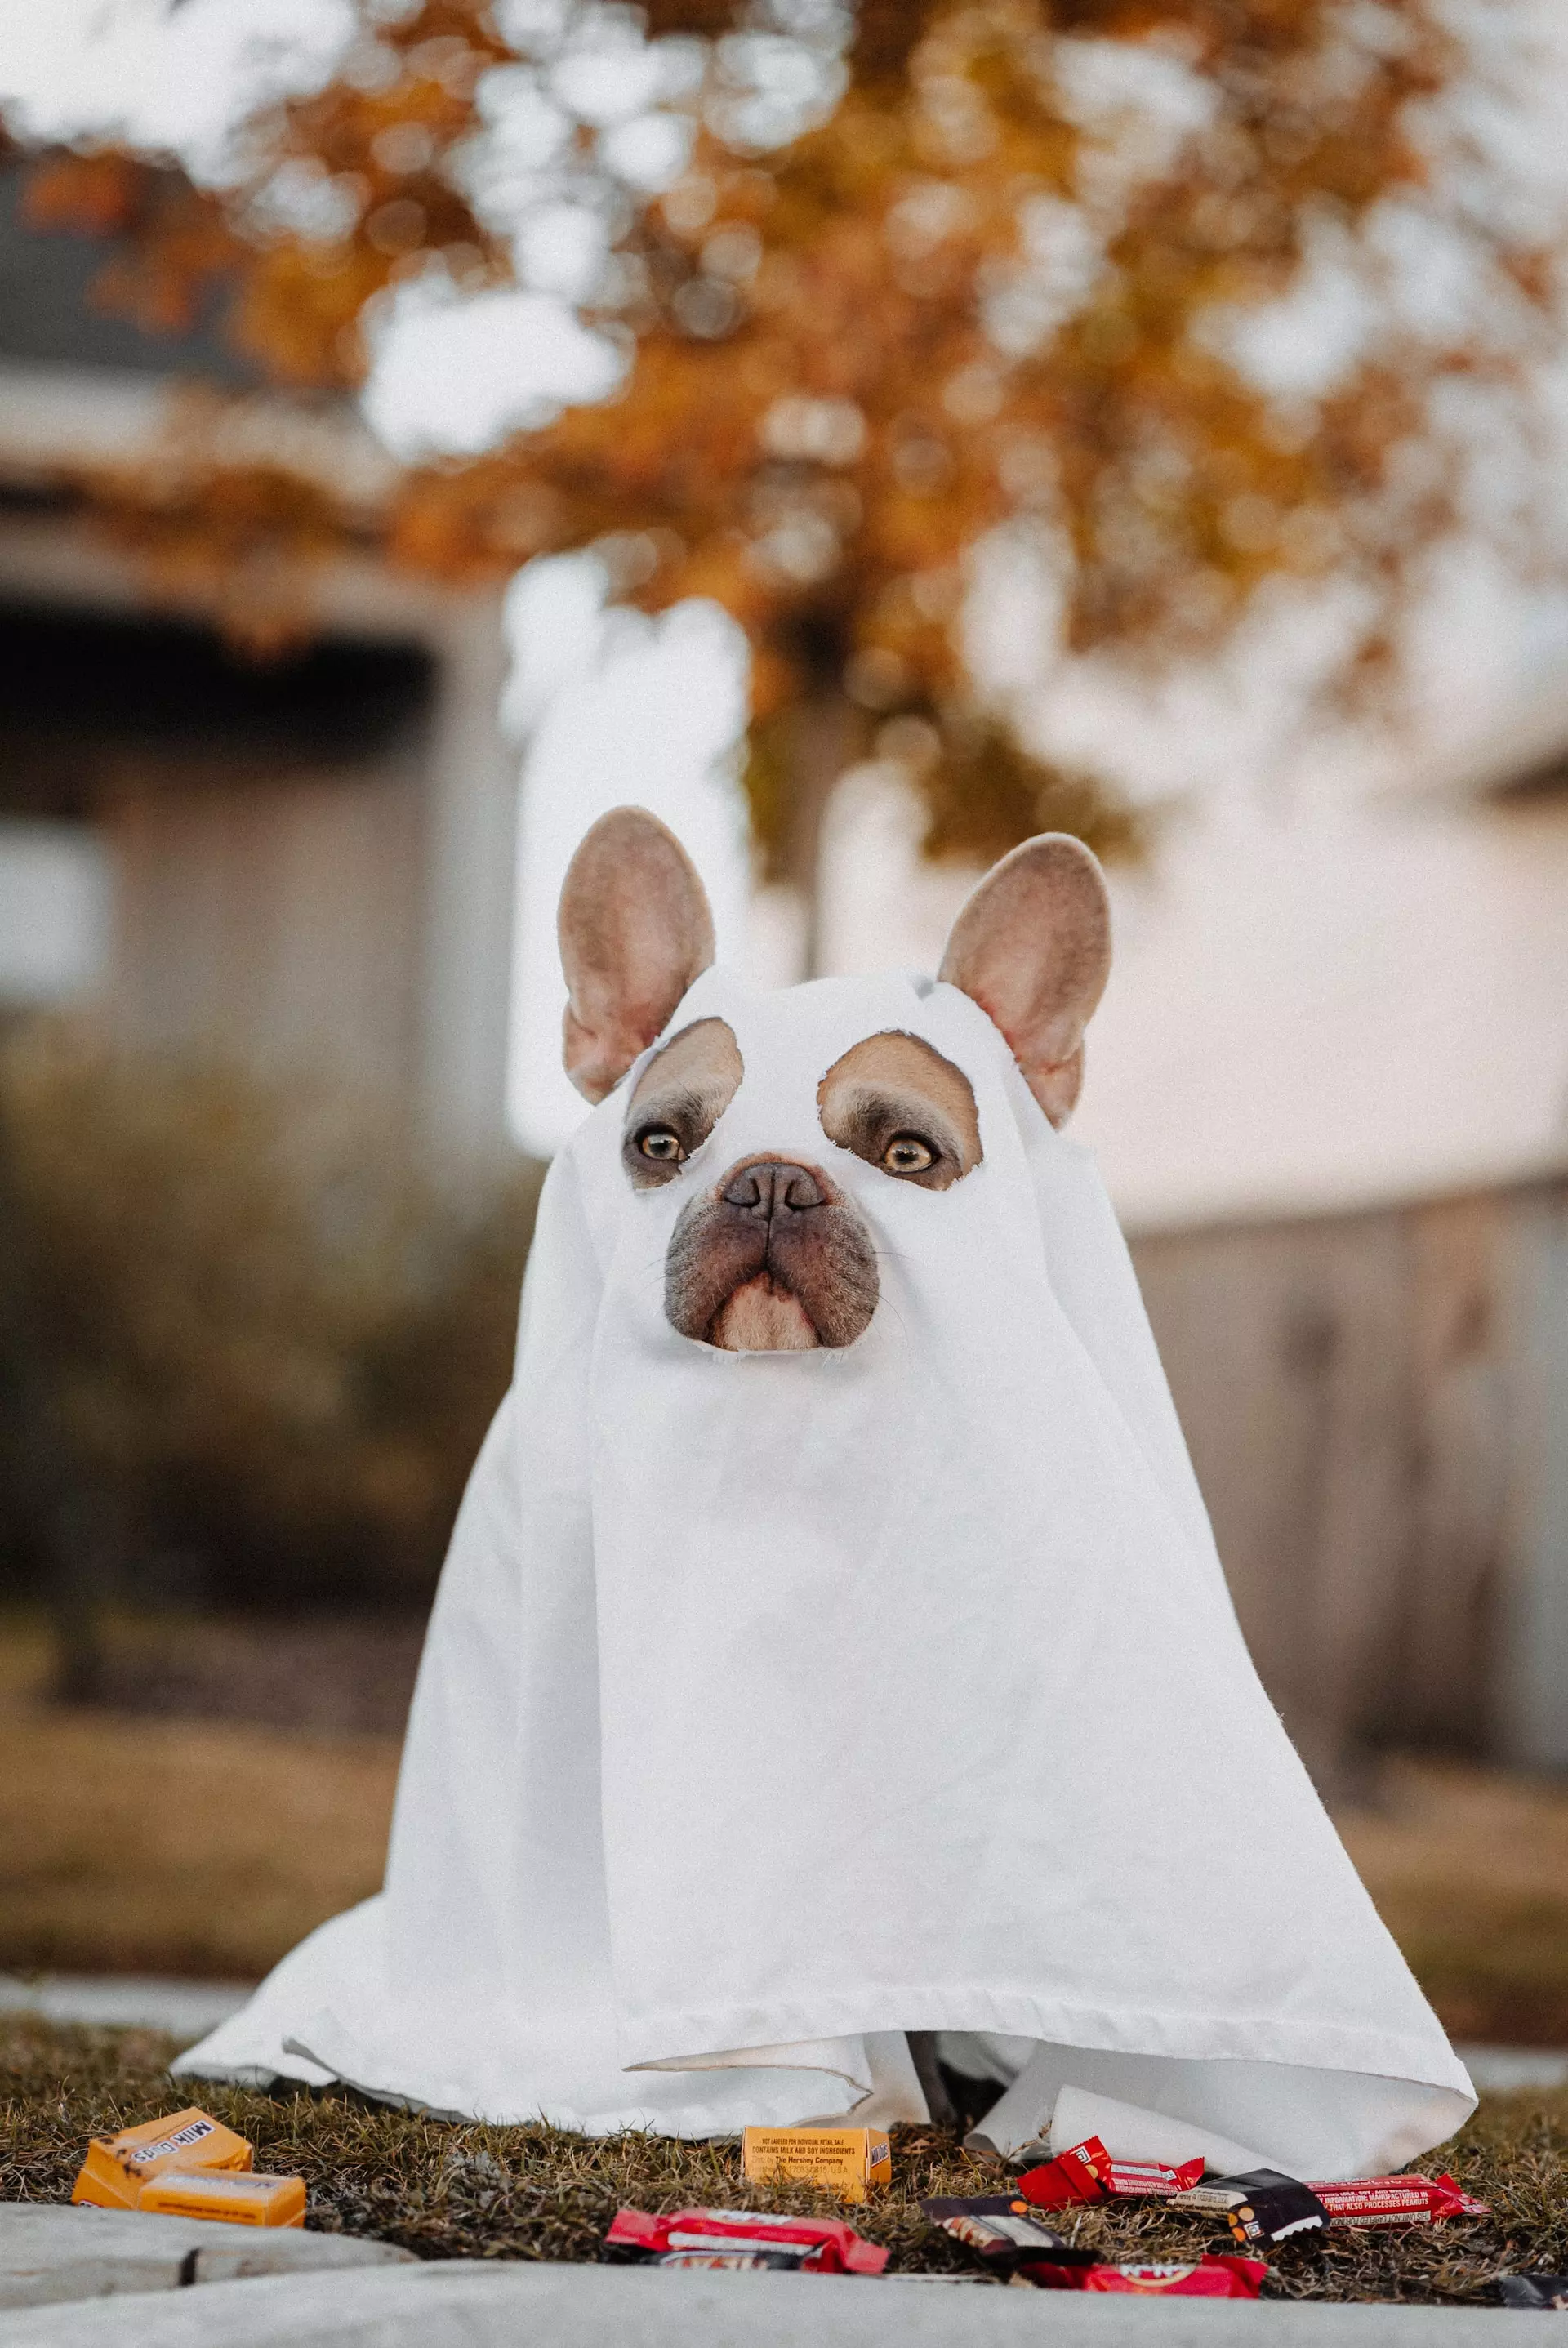 halloween dog costume – Bonnies Dog Blog NI